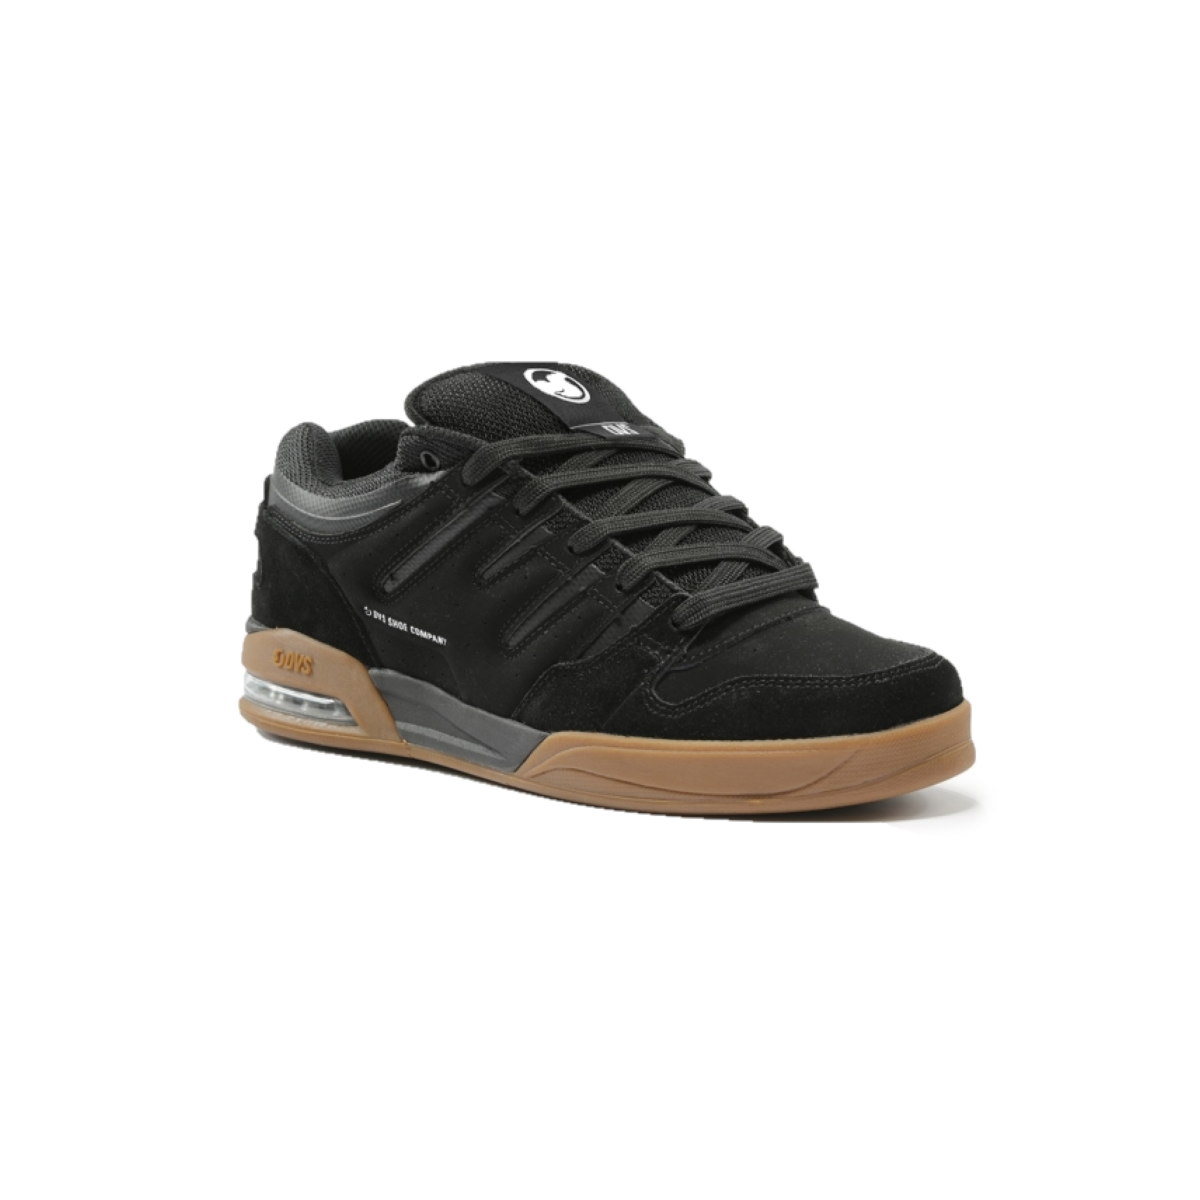 DVS F0000239006 TYCHO MN'S (Medium) Black/Black/White Leather & Nubuck Skate Shoes